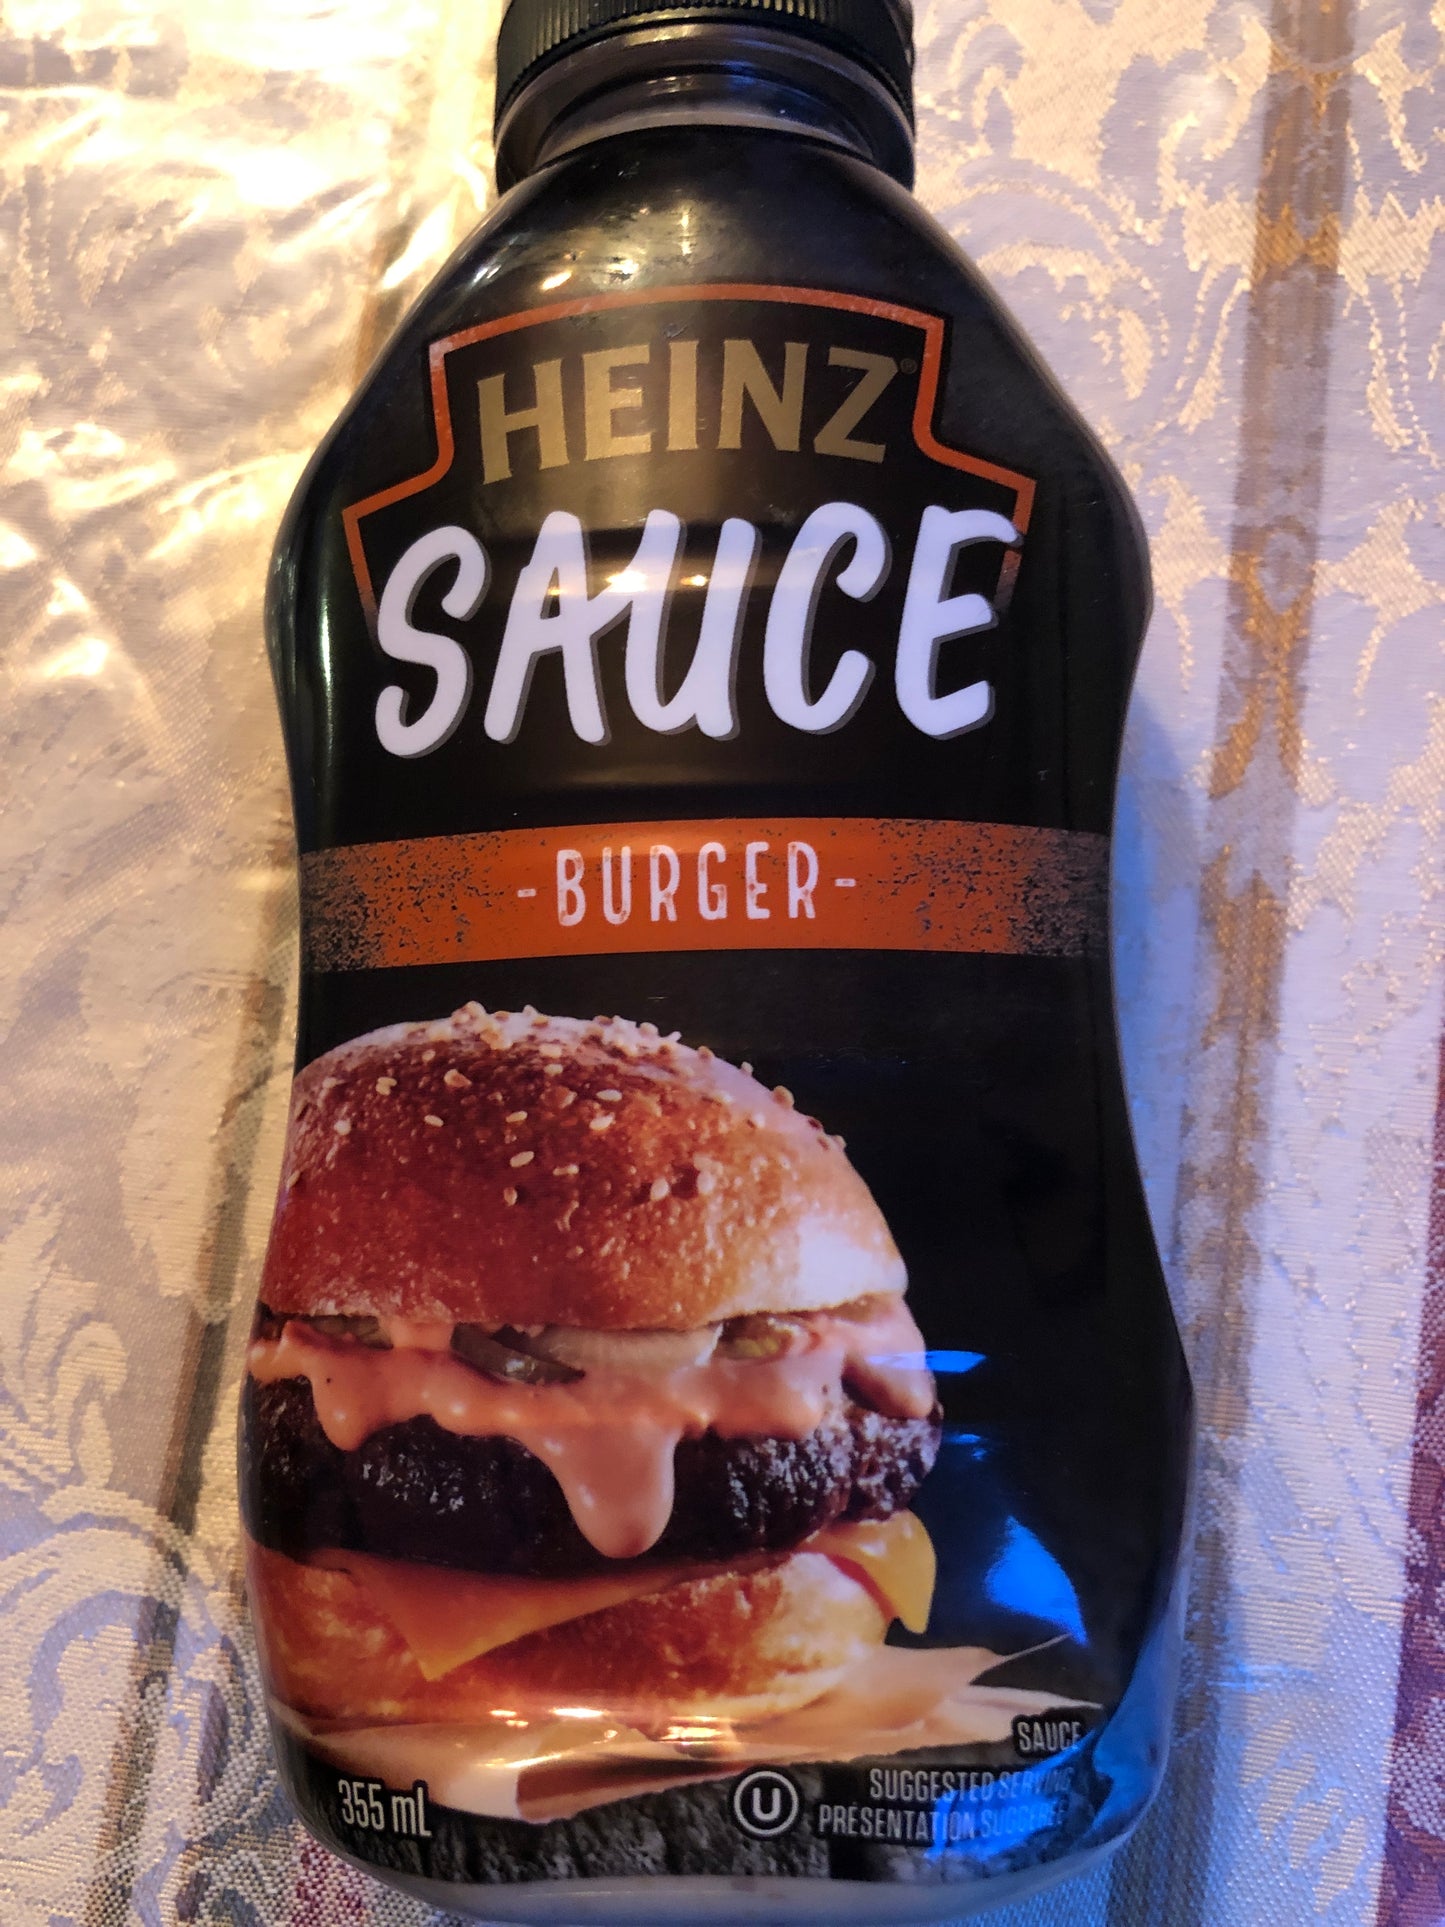 Heinz burger sauce